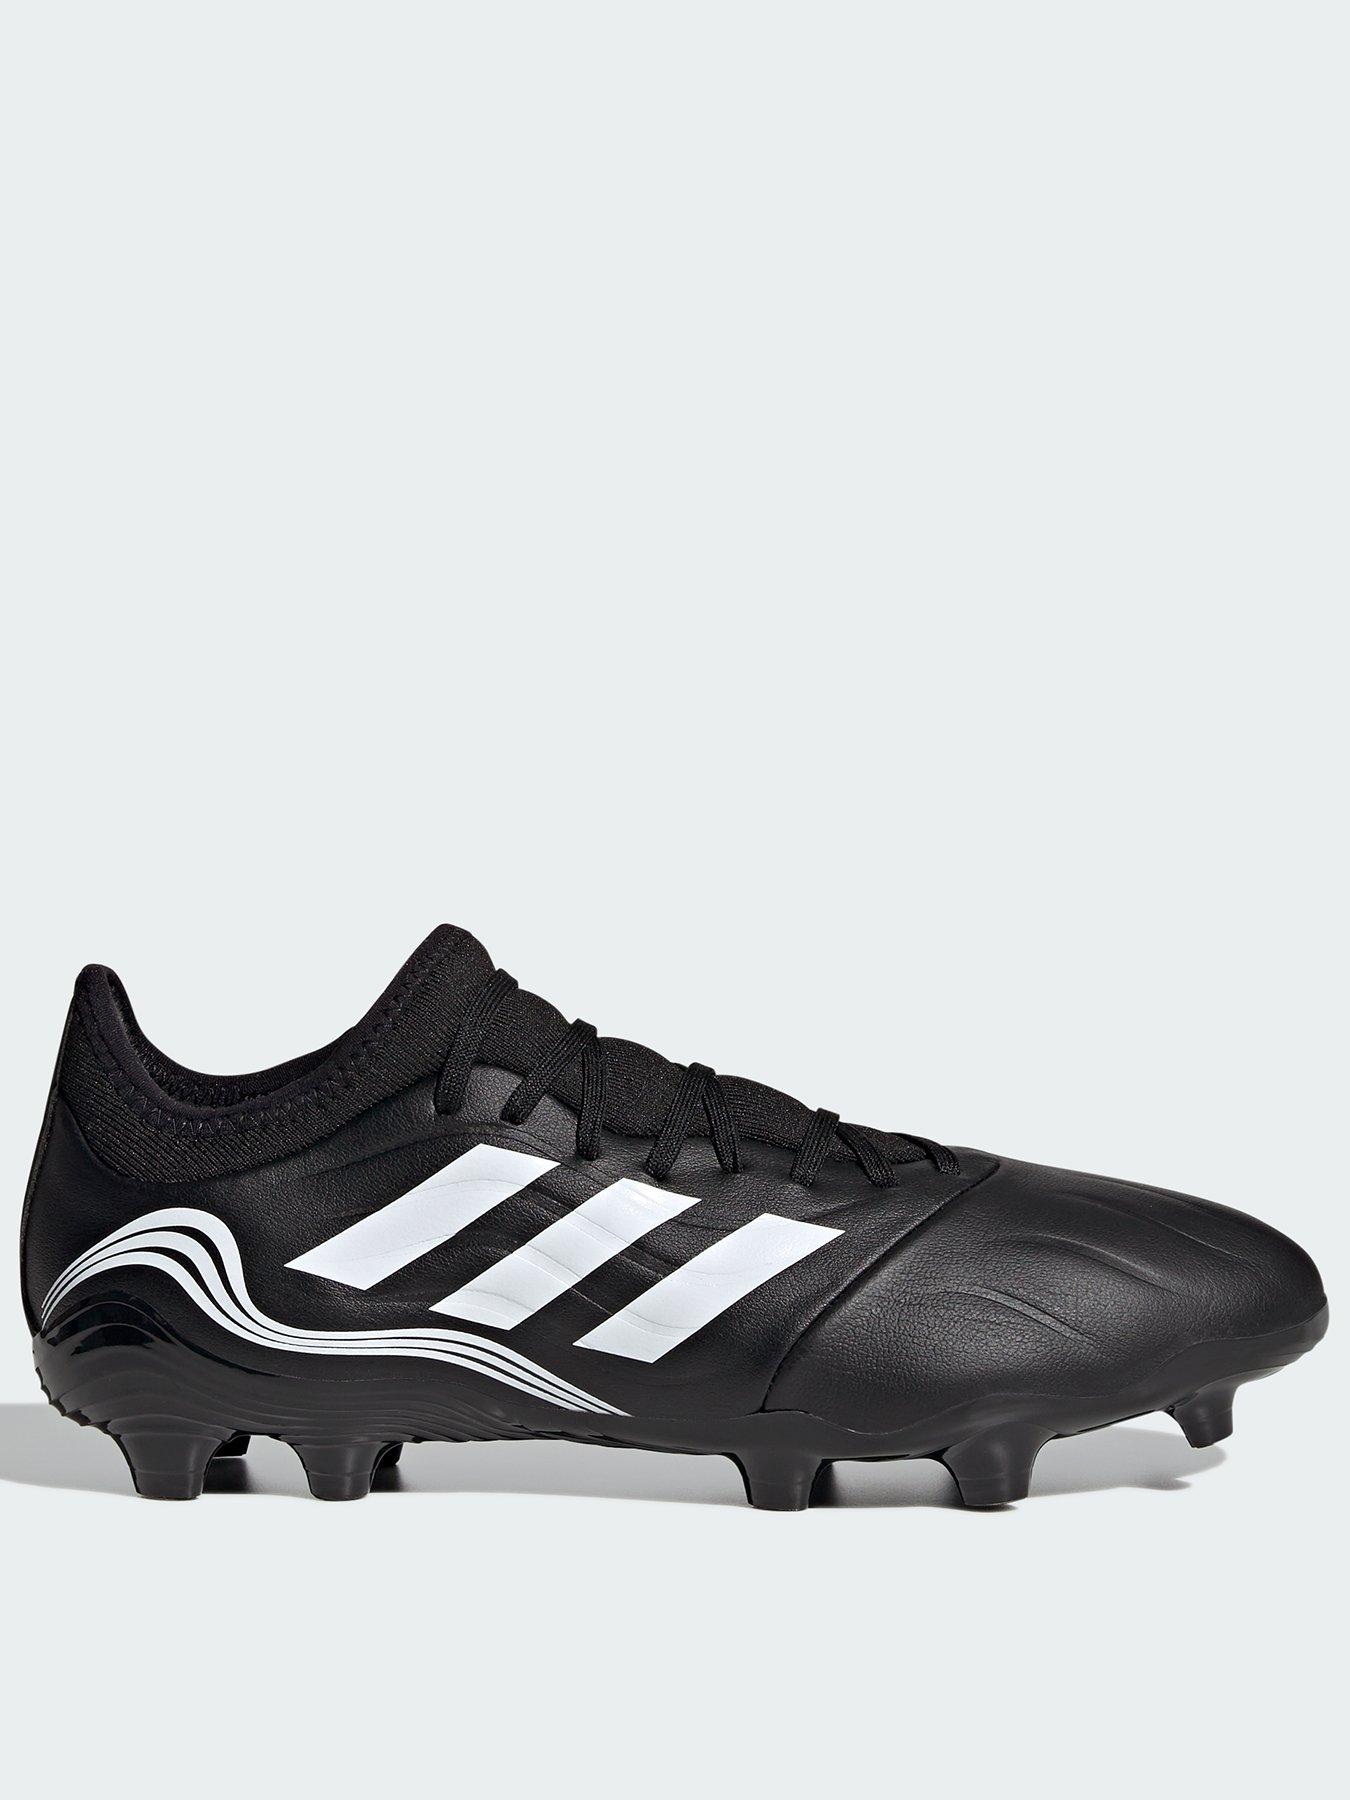 Adidas | boots | Football | Men www.very.co.uk